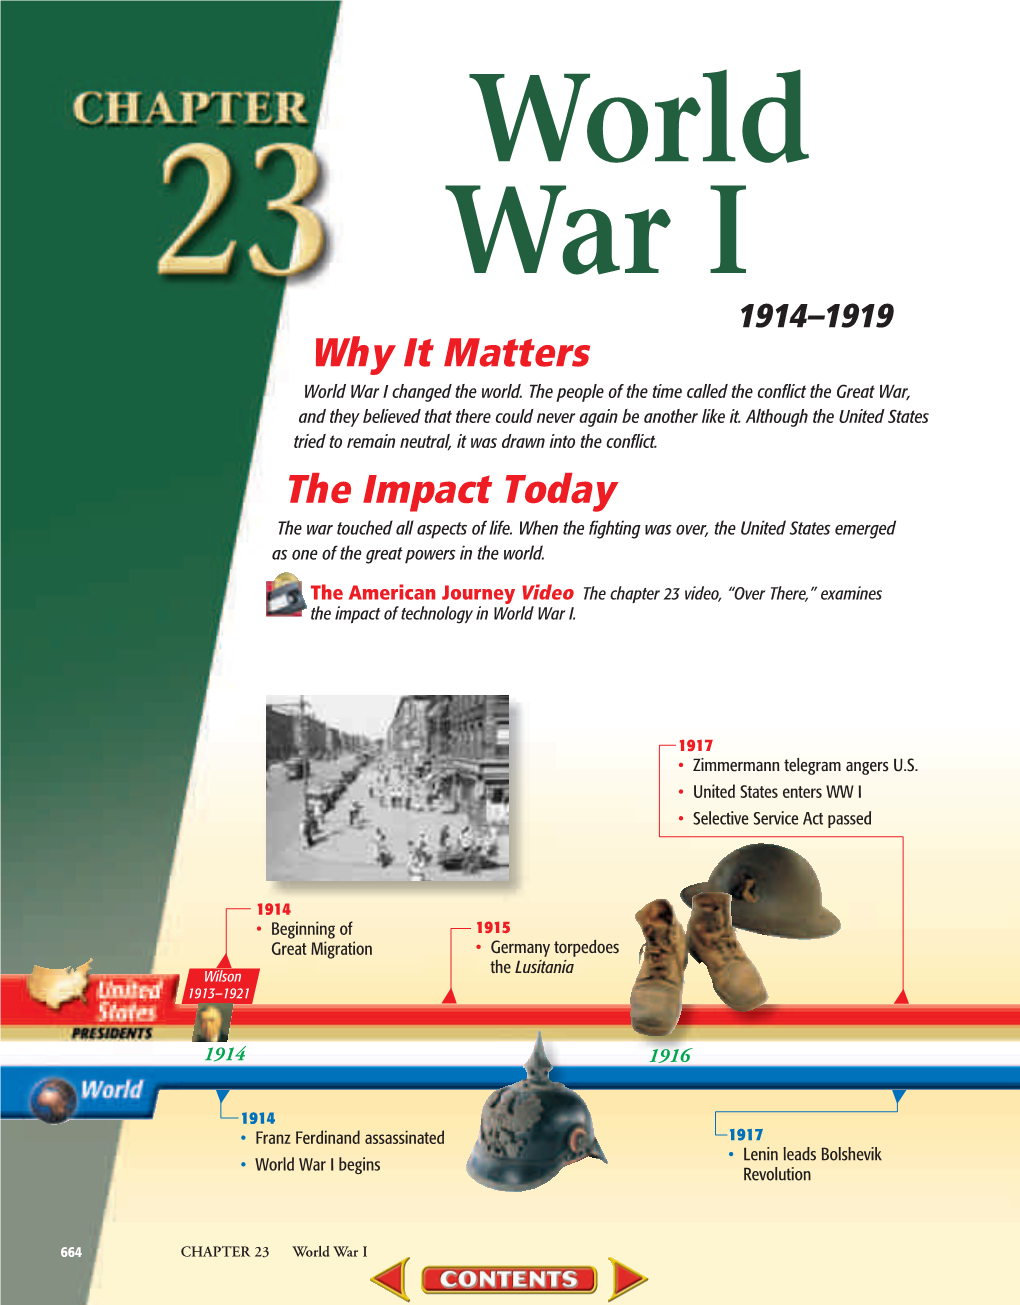 Chapter 23: World War I, 1914-1919